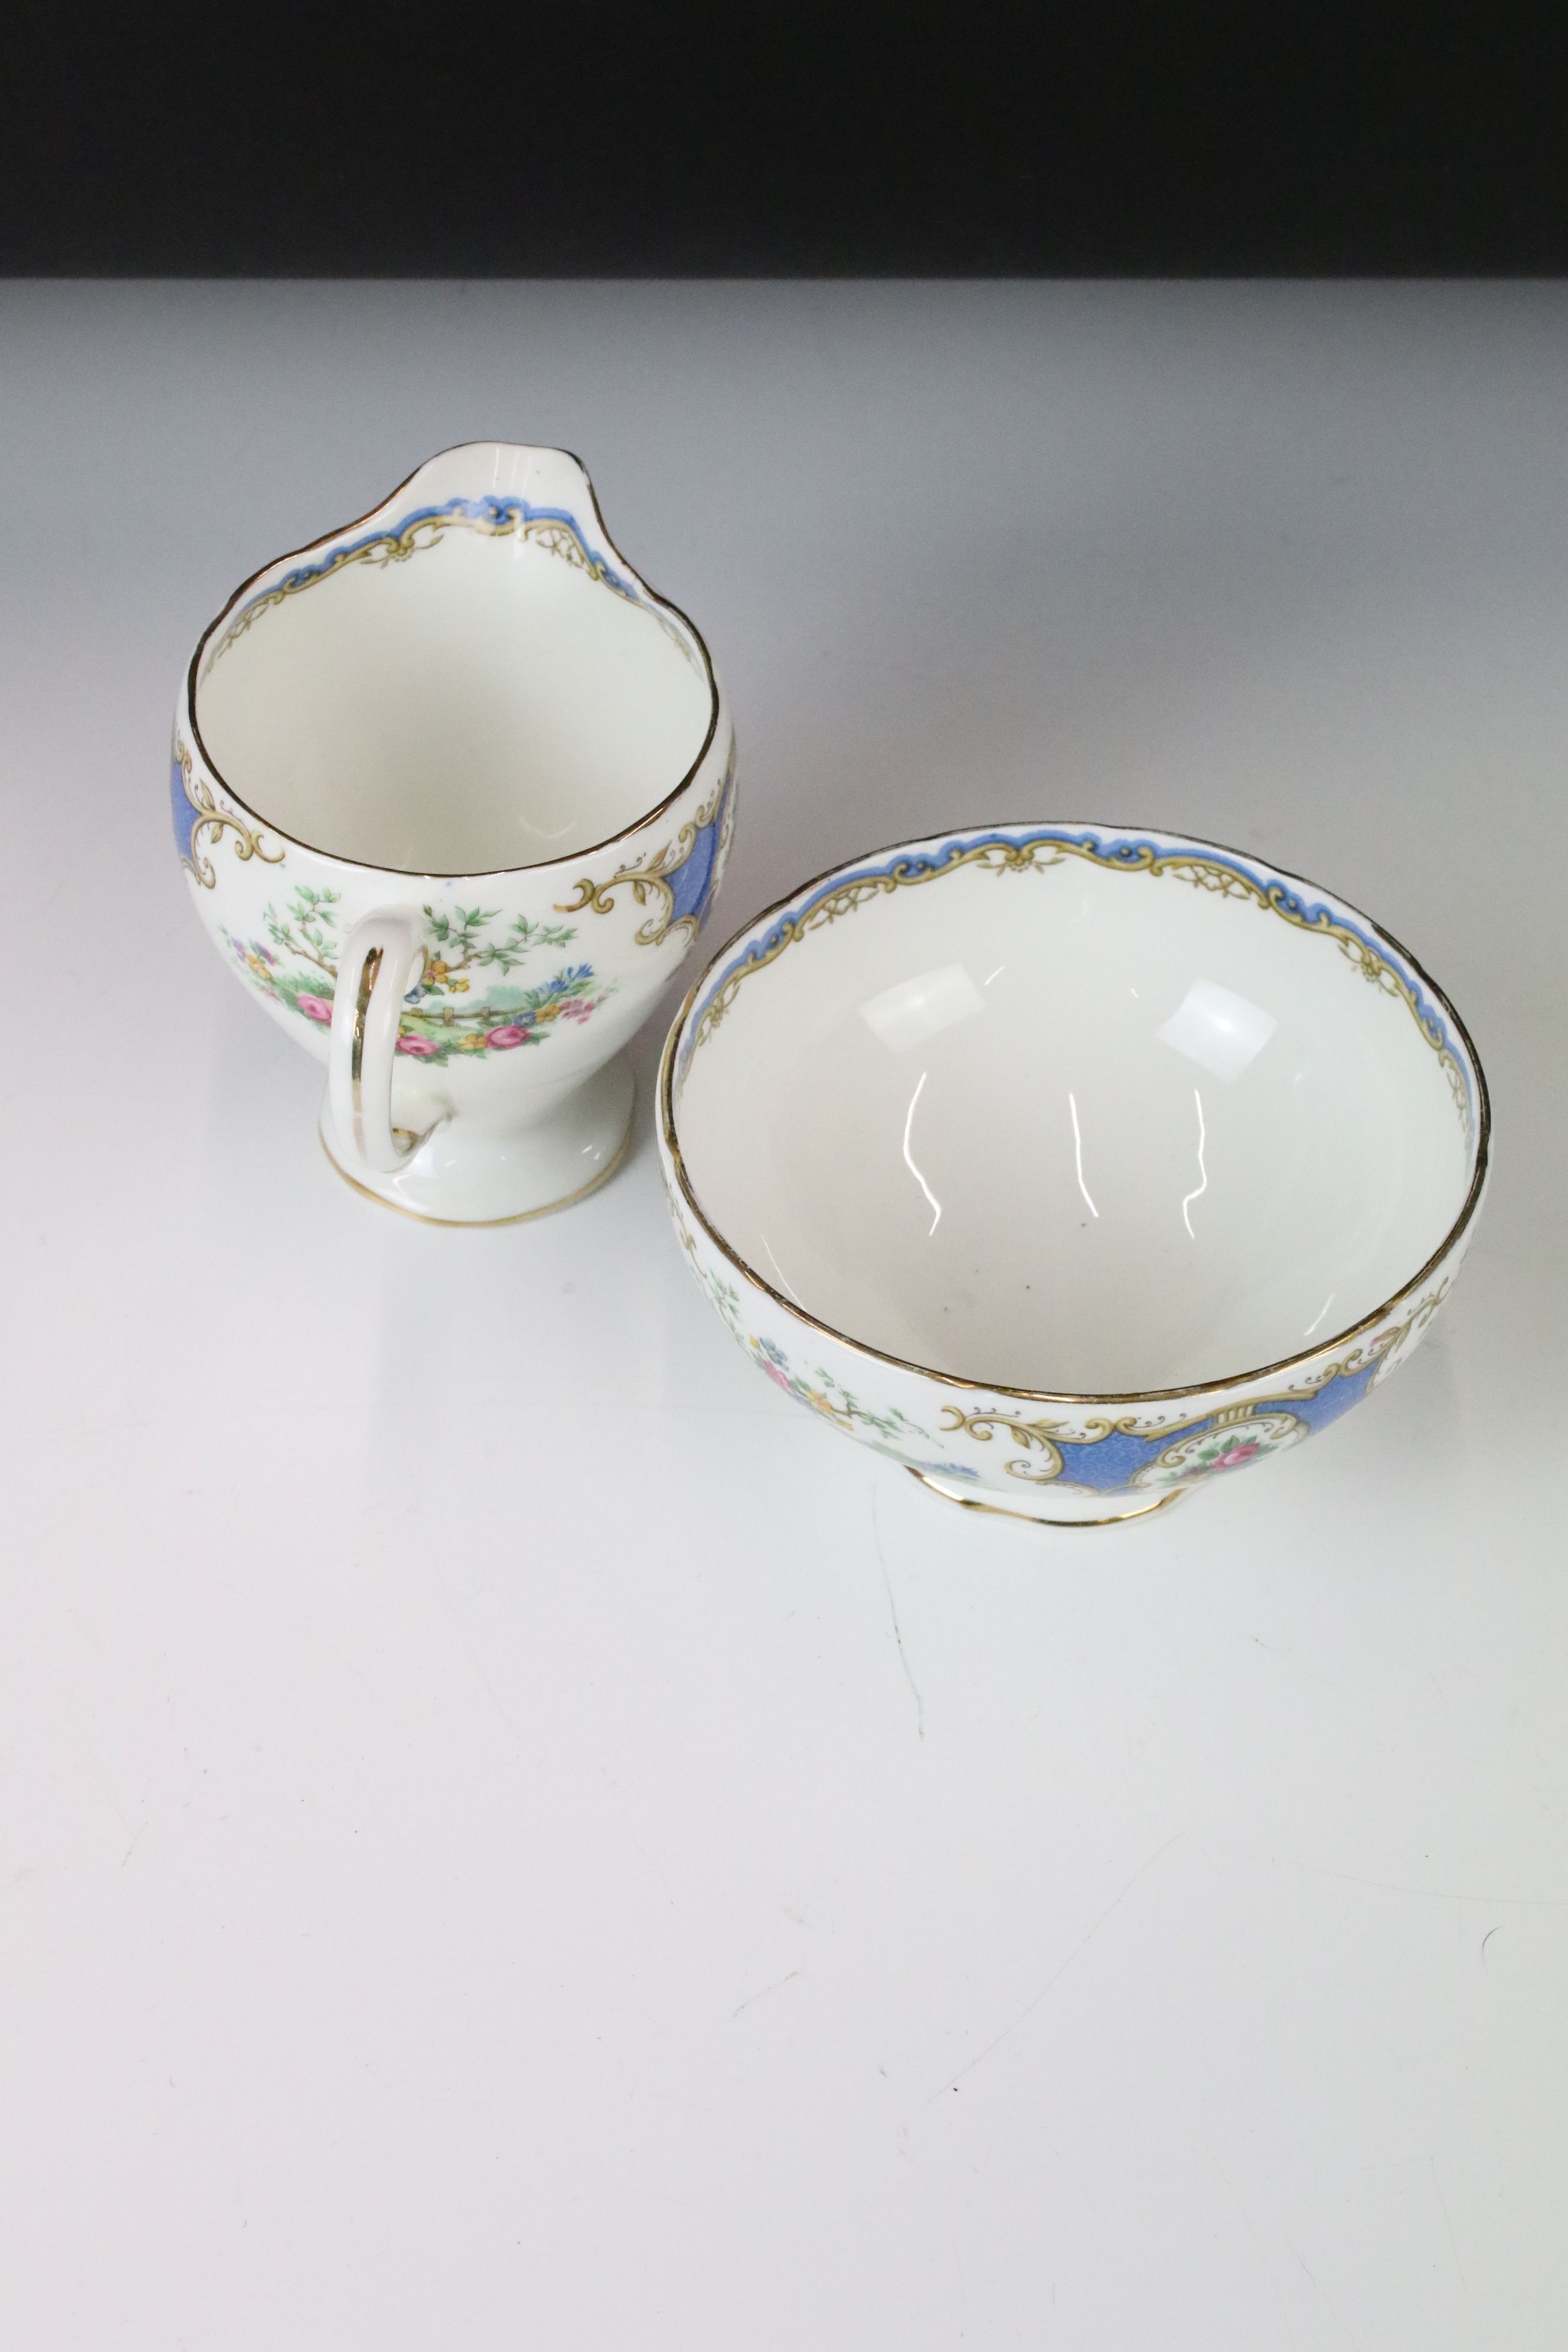 Foley ' Broadway ' pattern tea ware to include 8 teacups & saucers, 5 tea plates, milk jug and sugar - Image 16 of 25